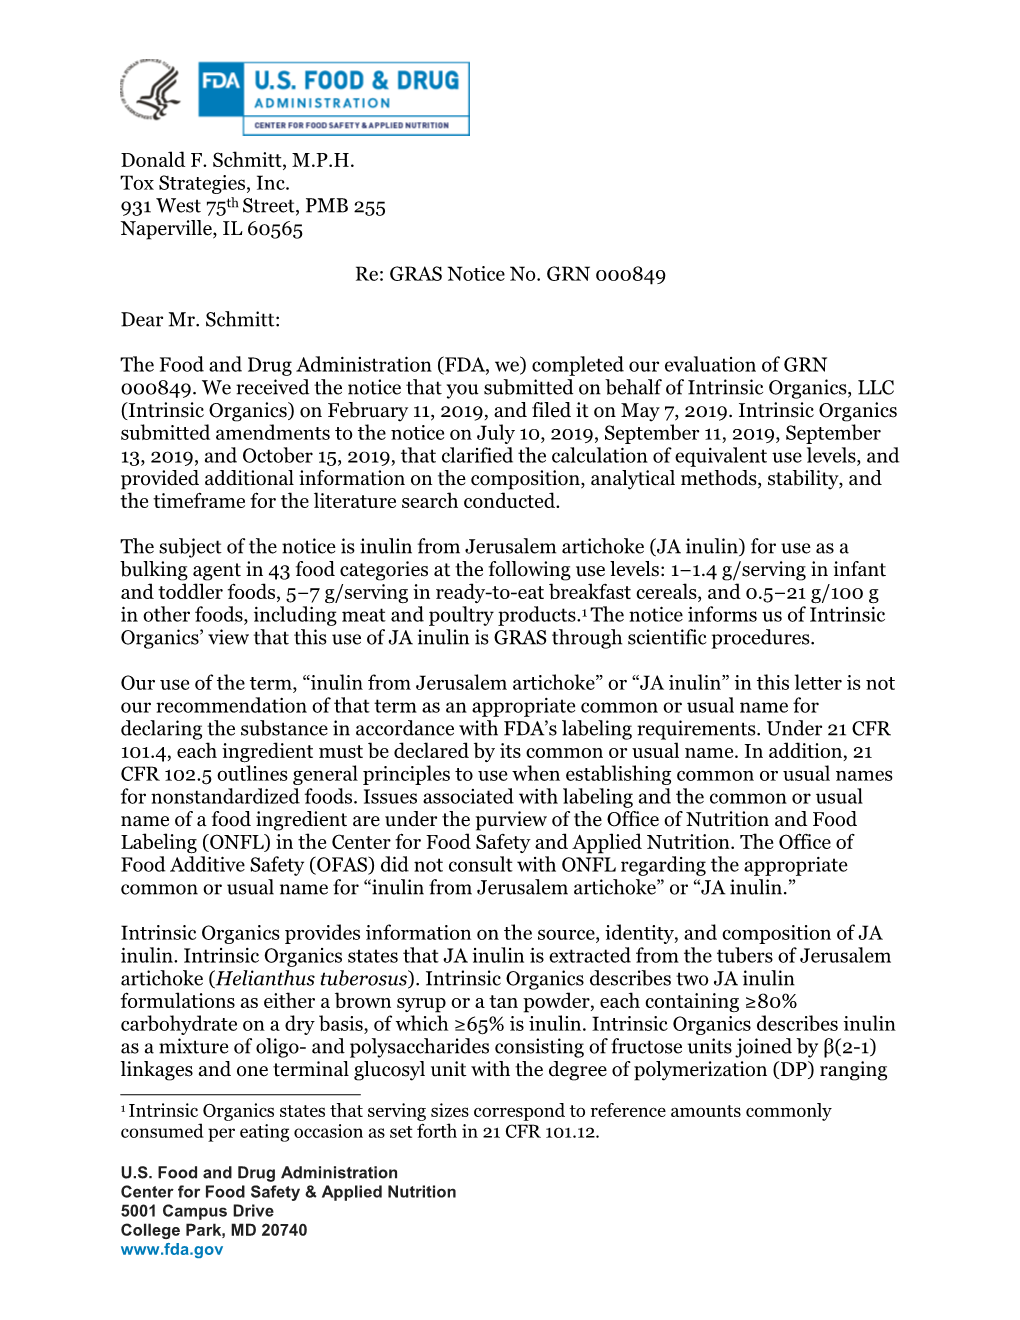 GRAS Notice GRN 849 Agency Response Letter